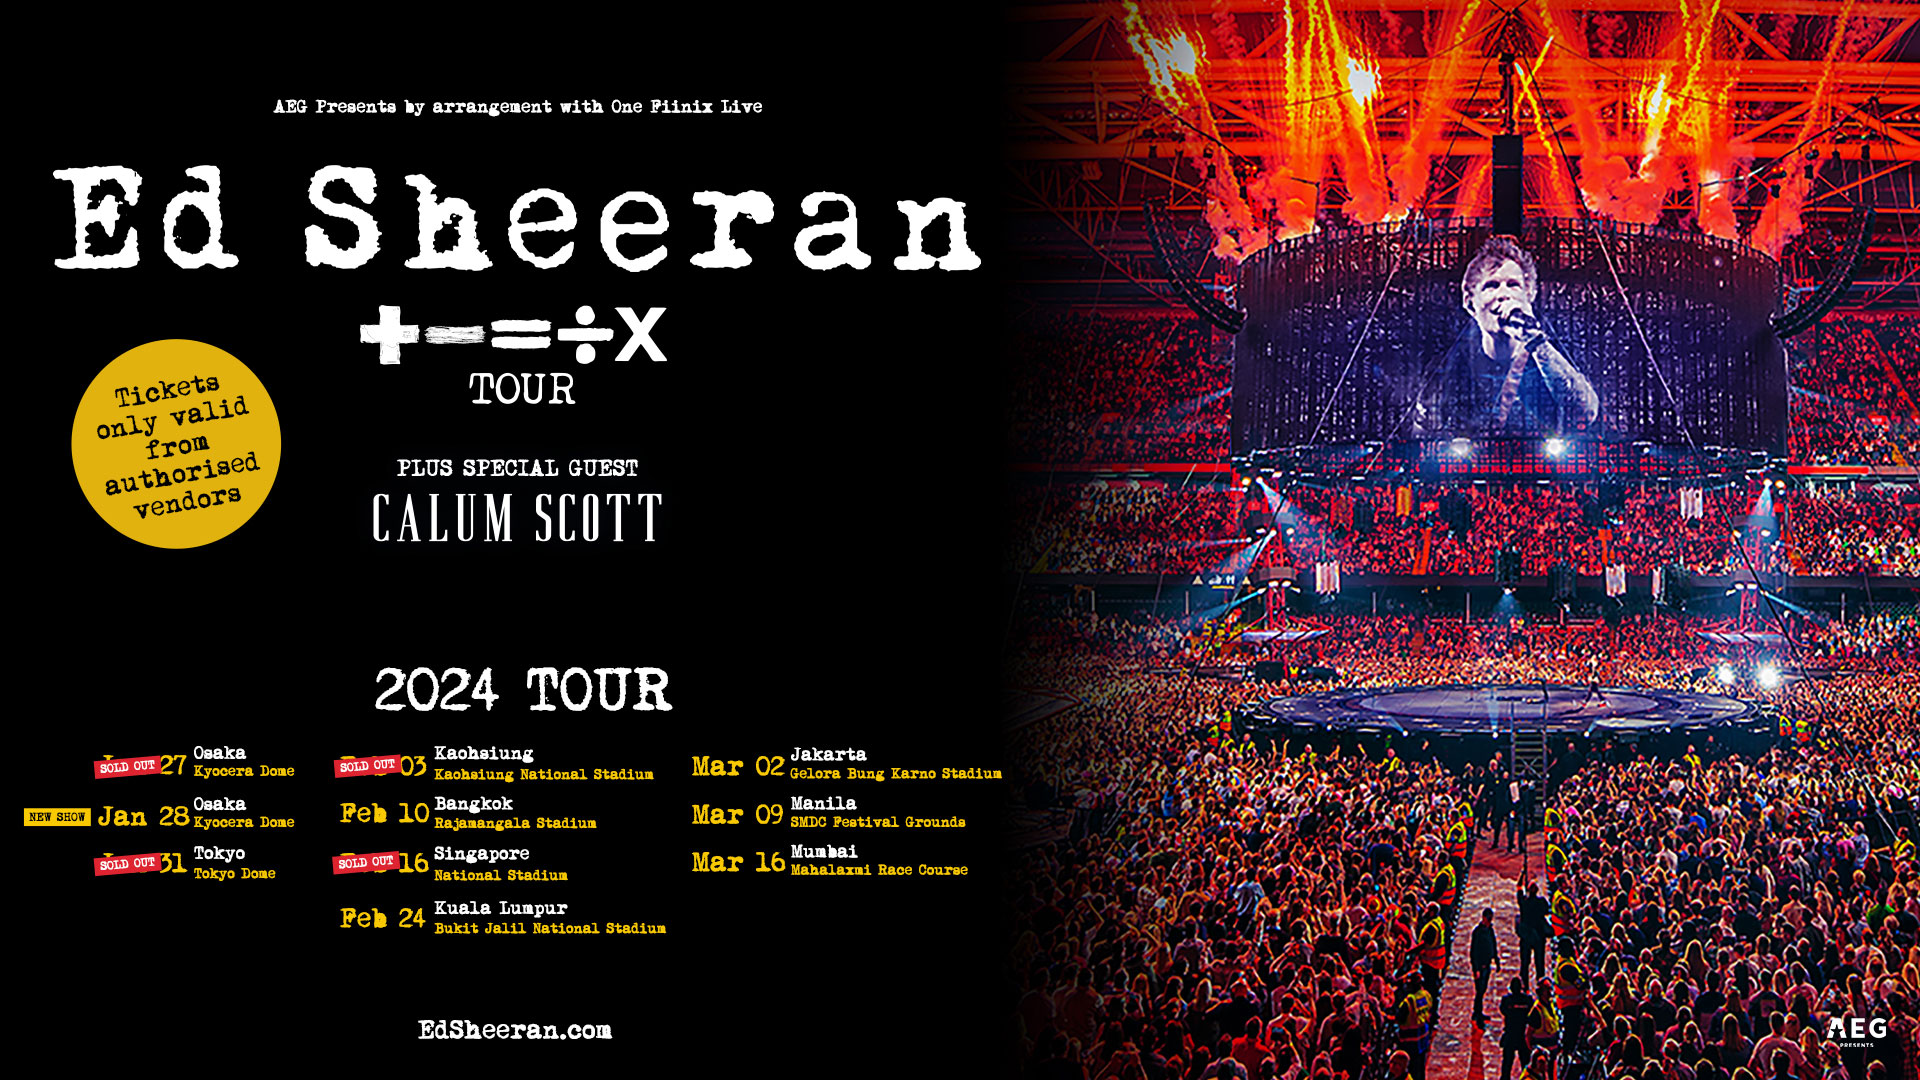 Ed Sheeran +-=/X Tour promo image